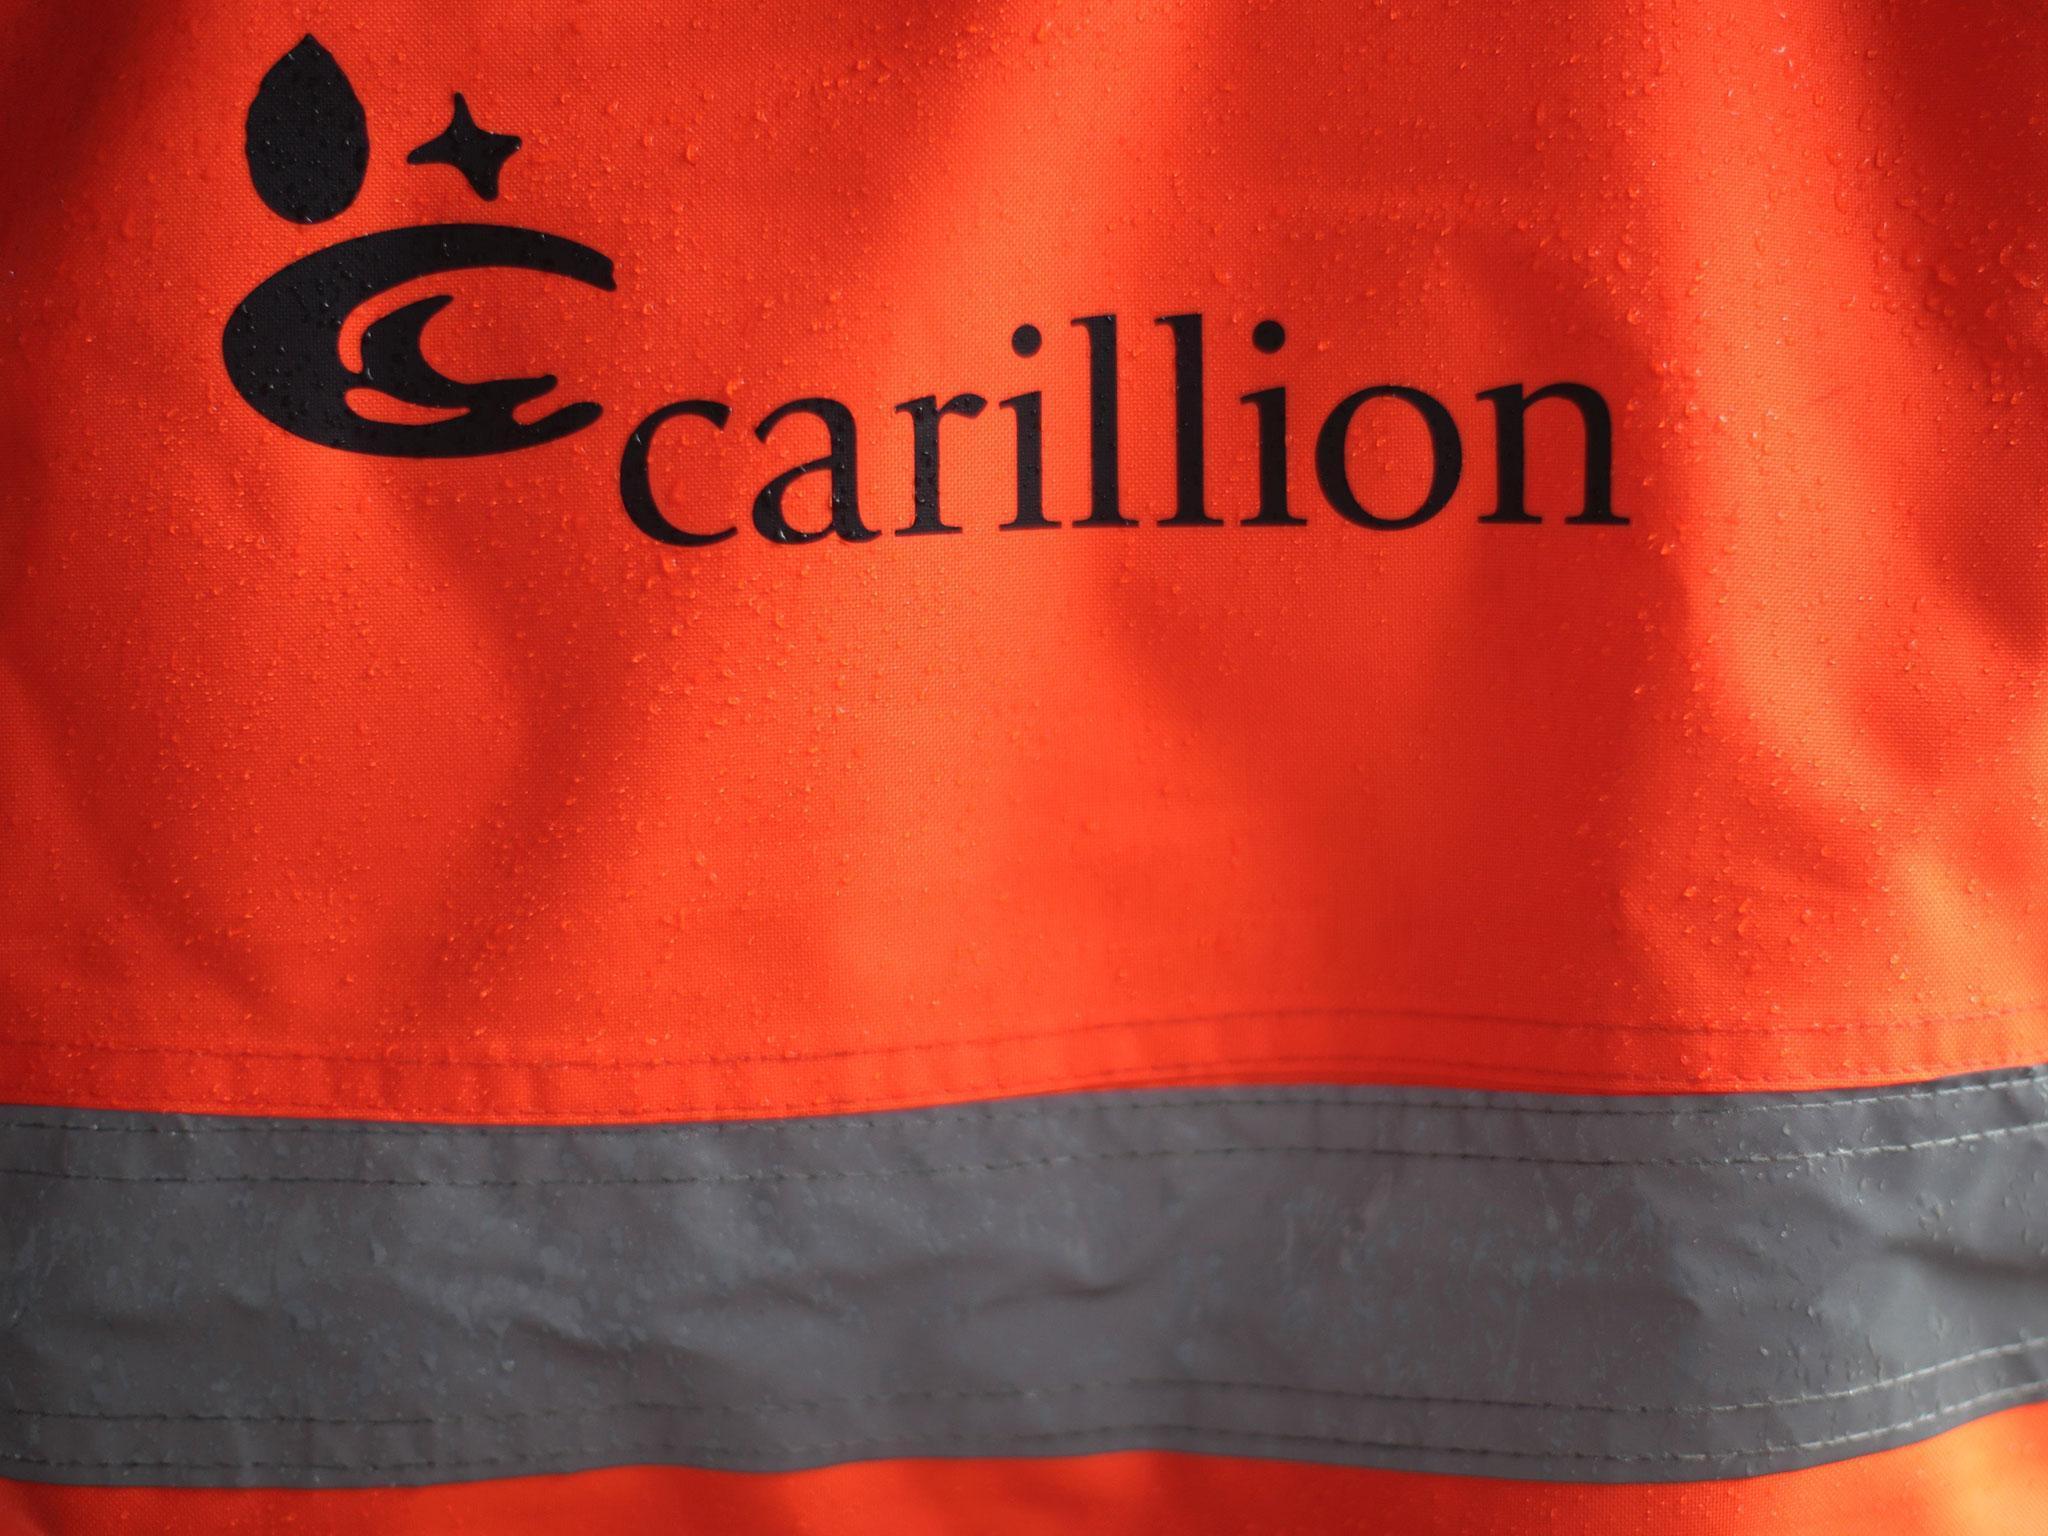 Before going into liquidation, Carillion employed 46,000 people worldwide